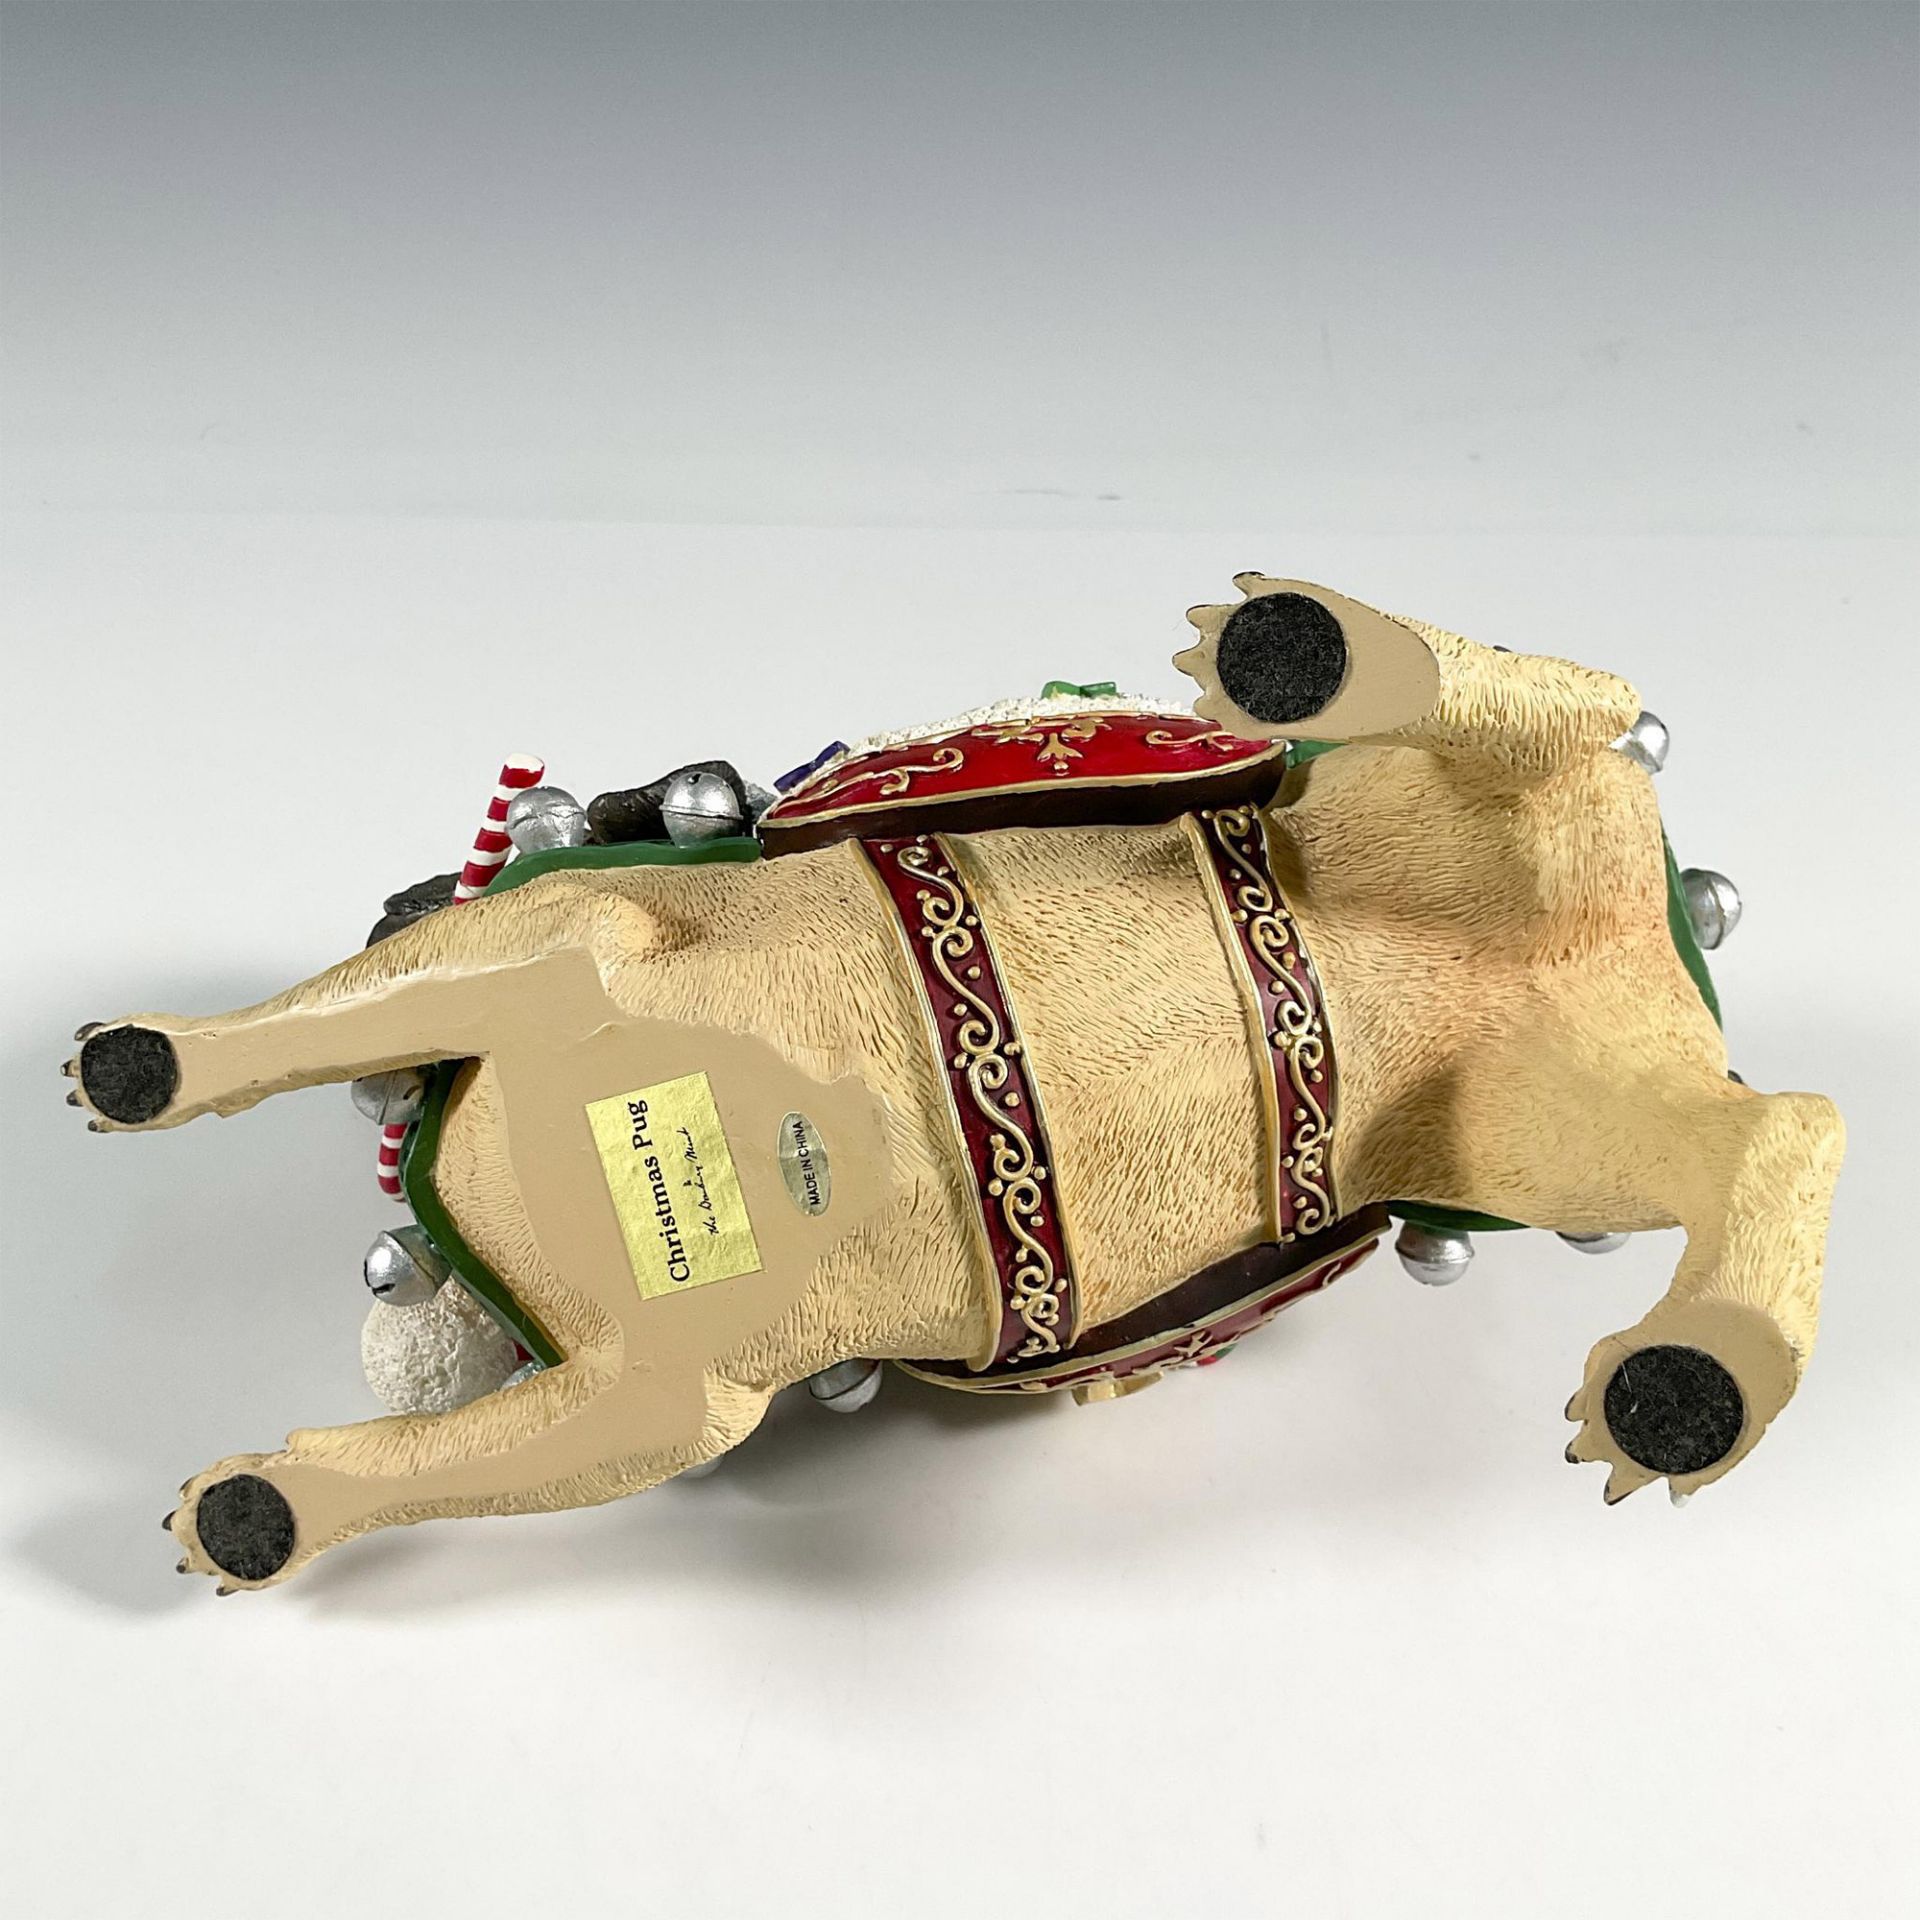 Danbury Mint Resin Figurine, Christmas Pug - Image 4 of 4